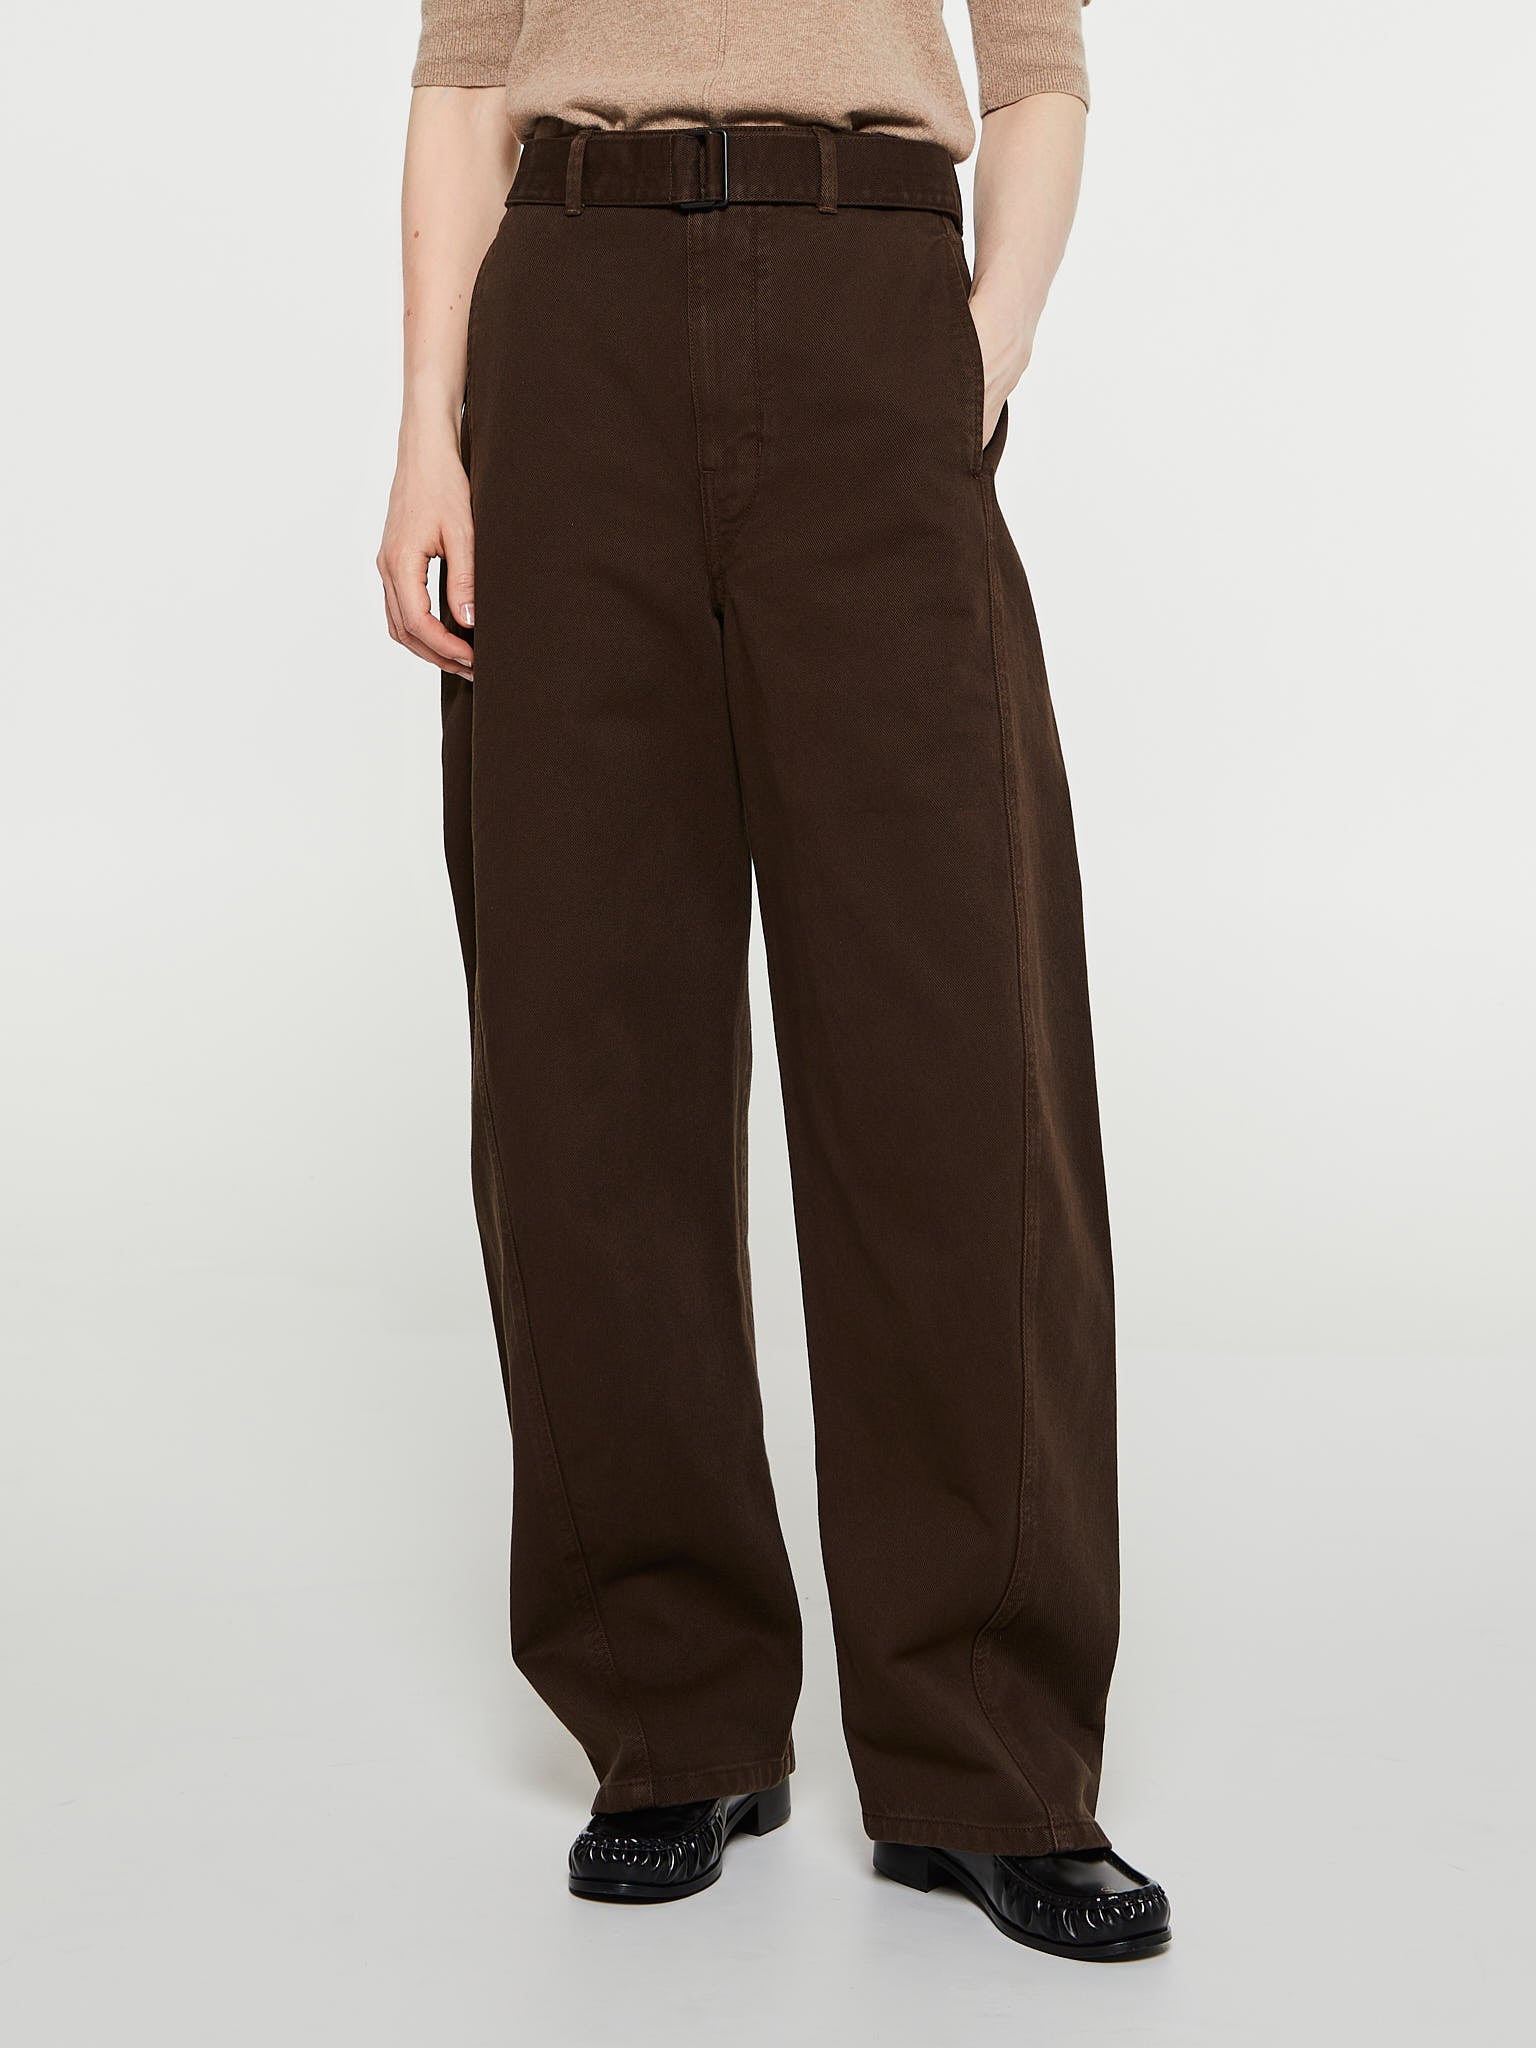 Twisted Belted Pants in Dark Brown